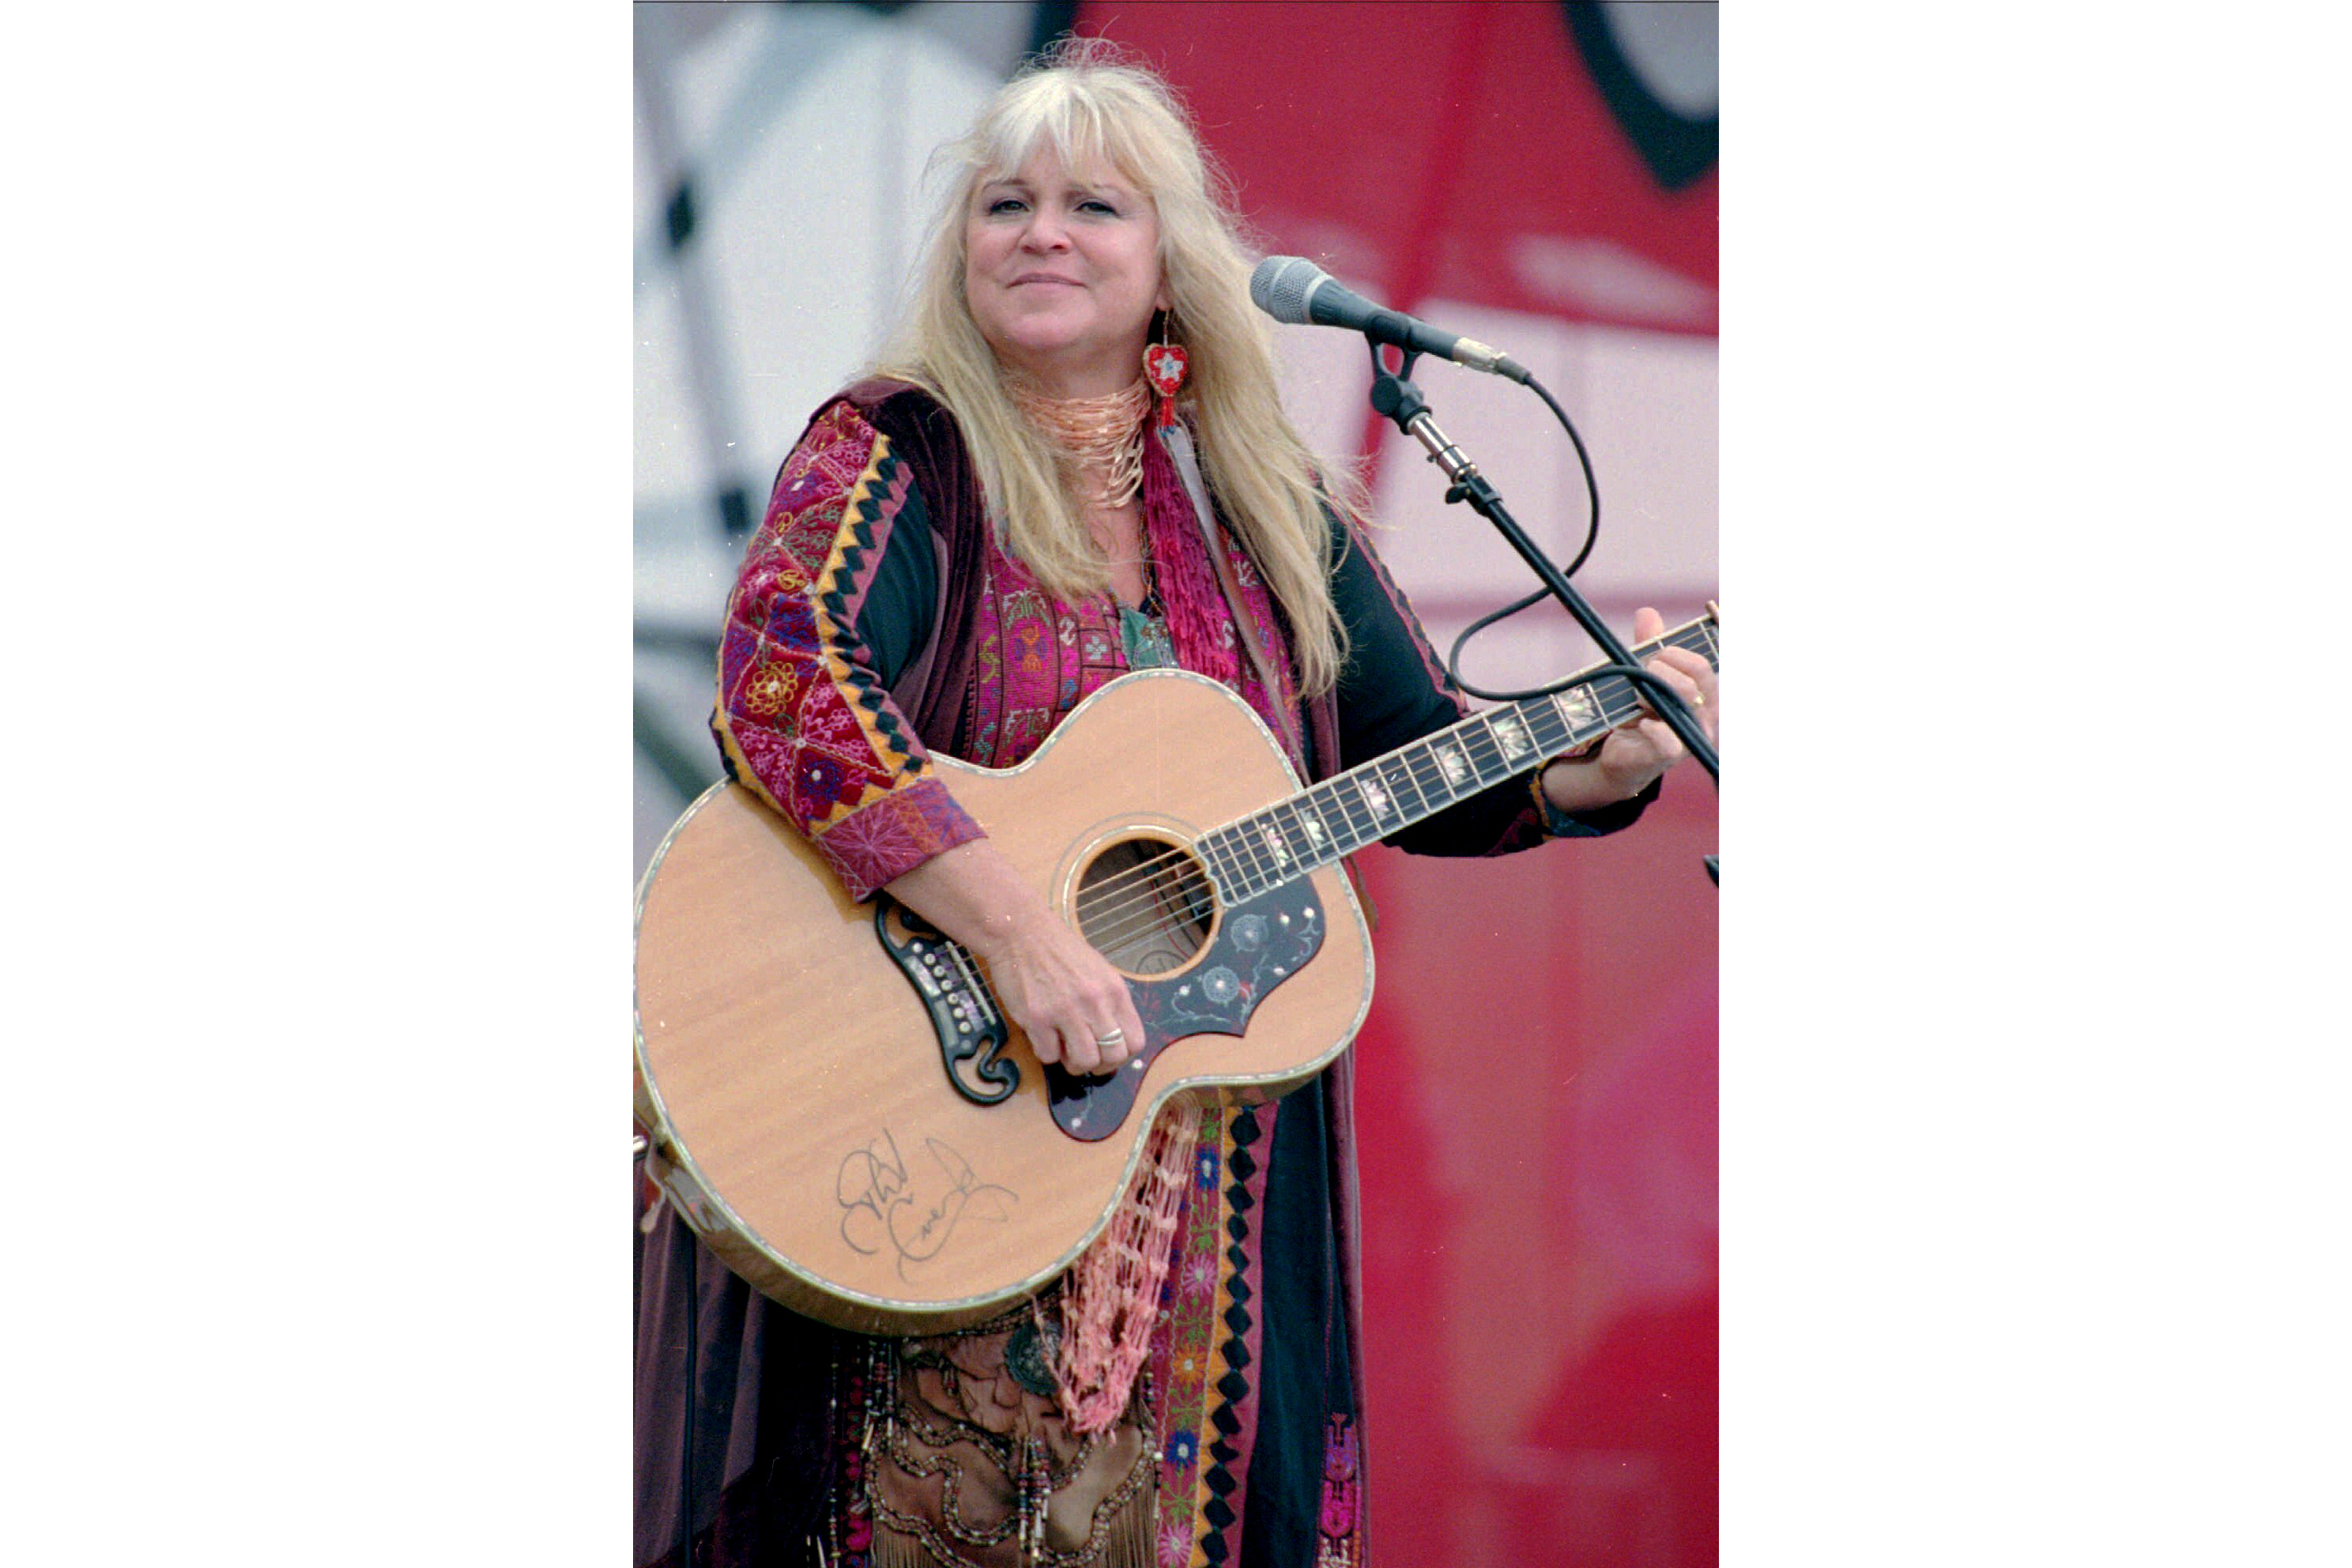 Melanie Dead: Singer Performed at Woodstock and Sang 'Brand New Key